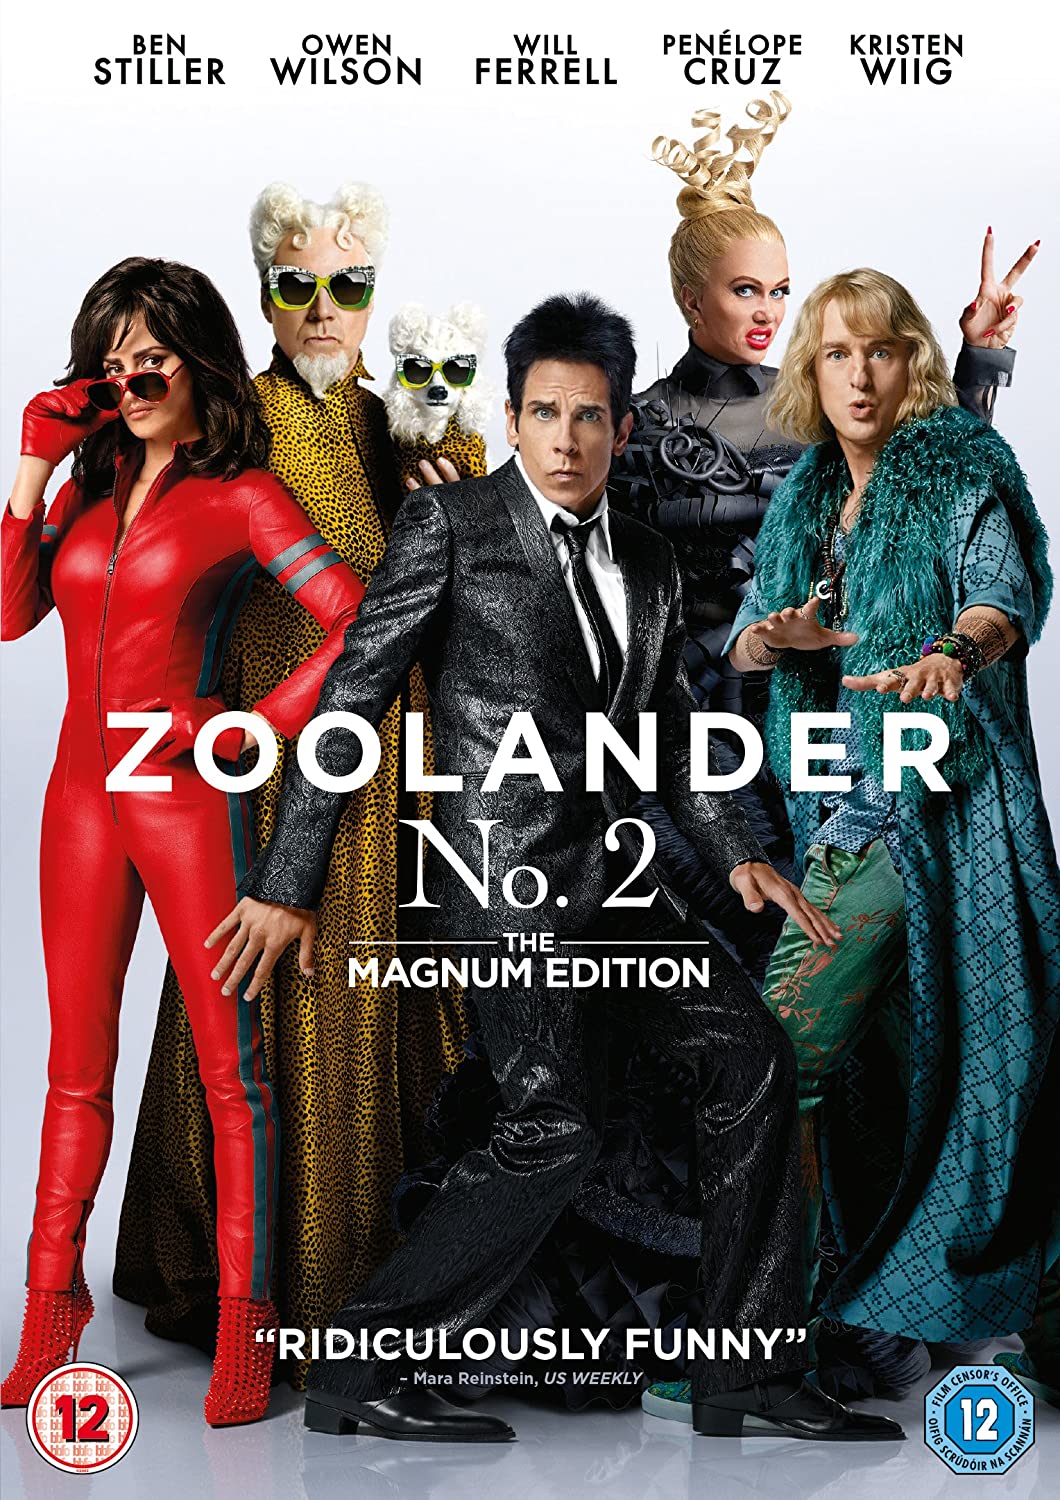 Zoolander 2 [2016]- Comedy [DVD]